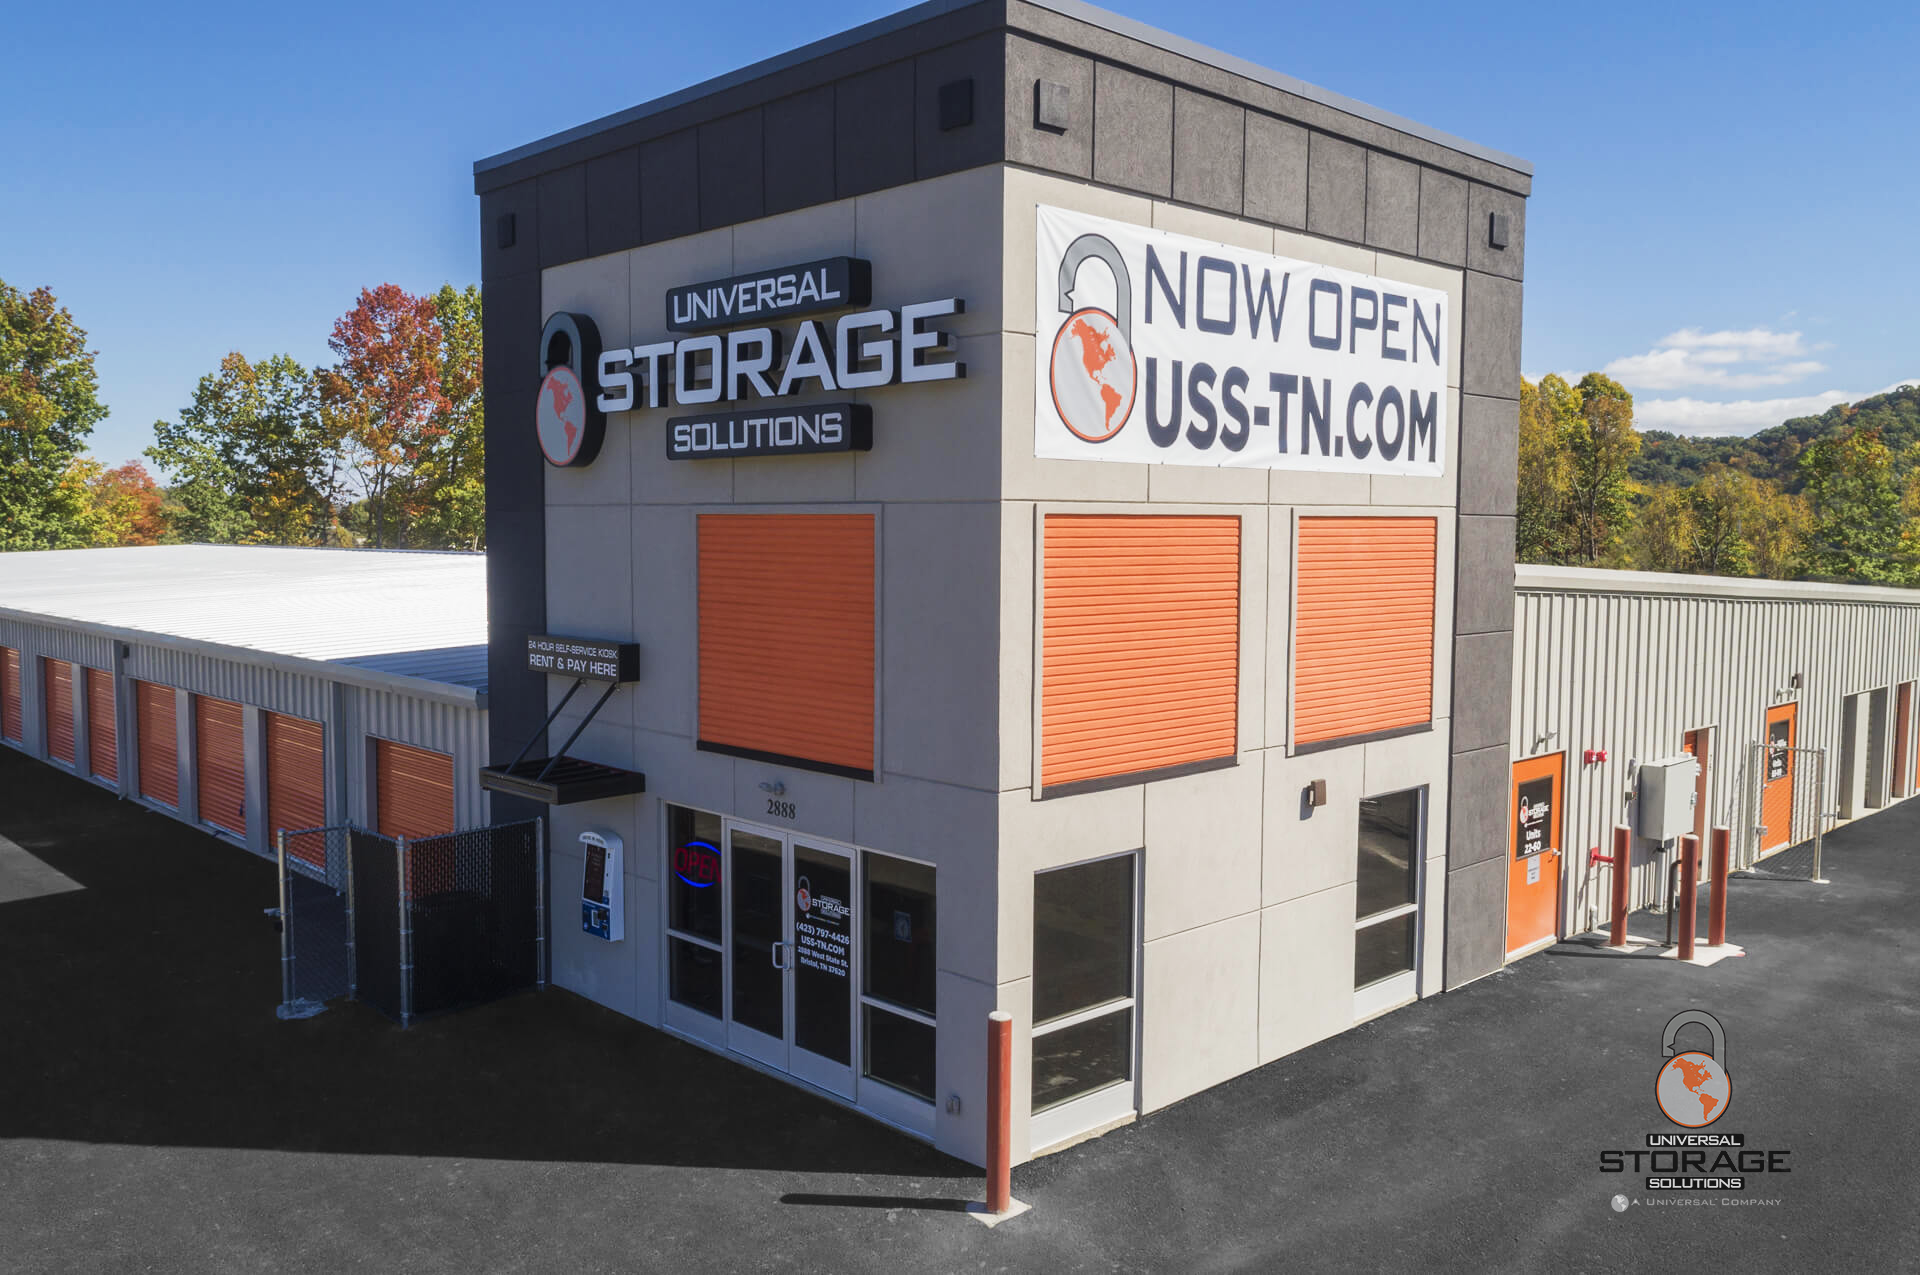 Universal Storage Solutions Bristol Tennessee